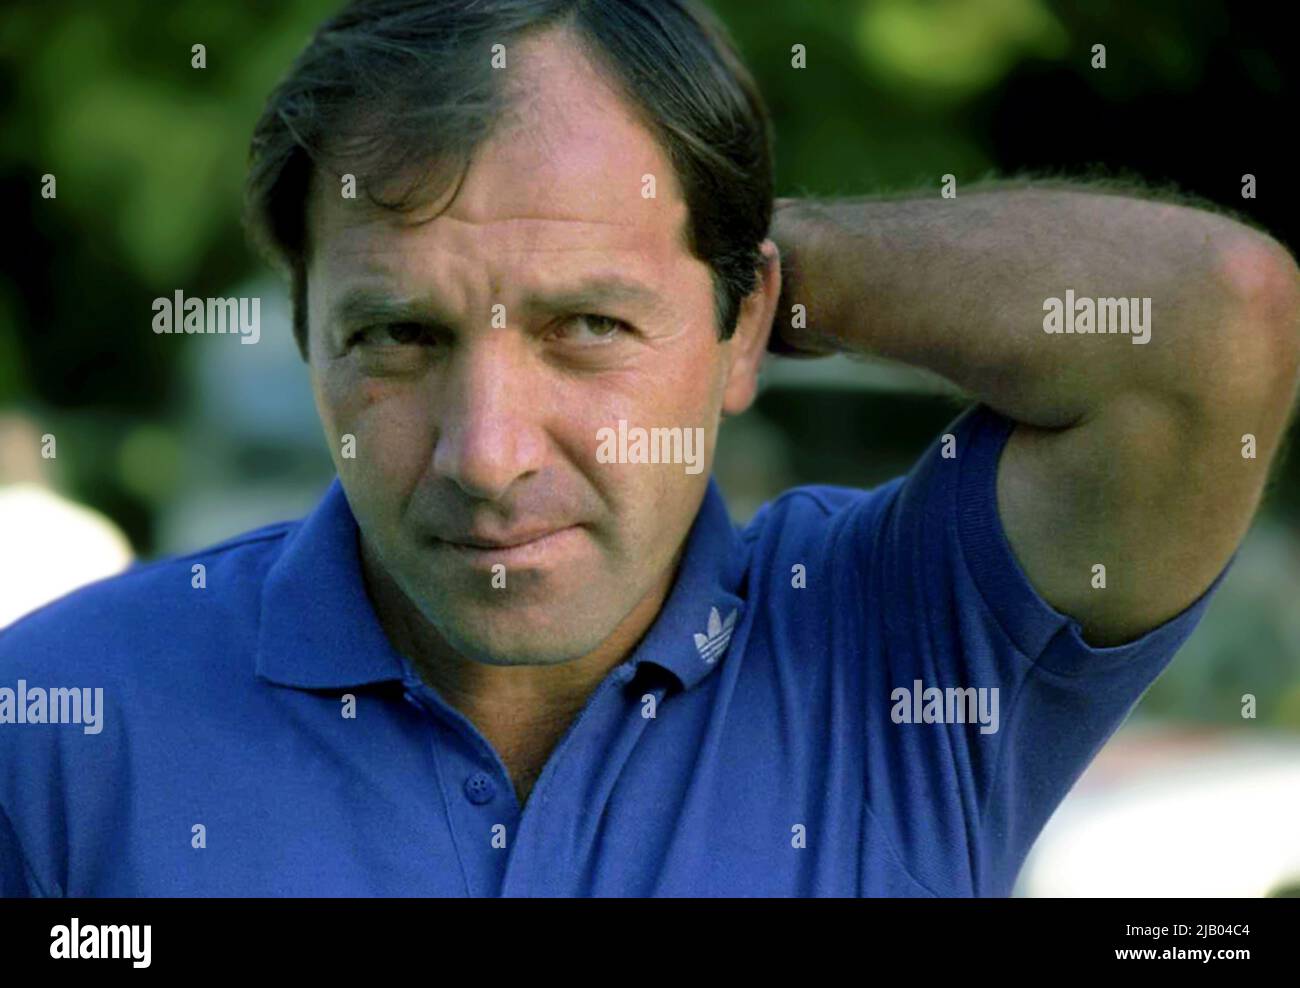 Rumänischer ehemaliger Tennisspieler Dumitru Hărădău, ca. 1993 Stockfoto